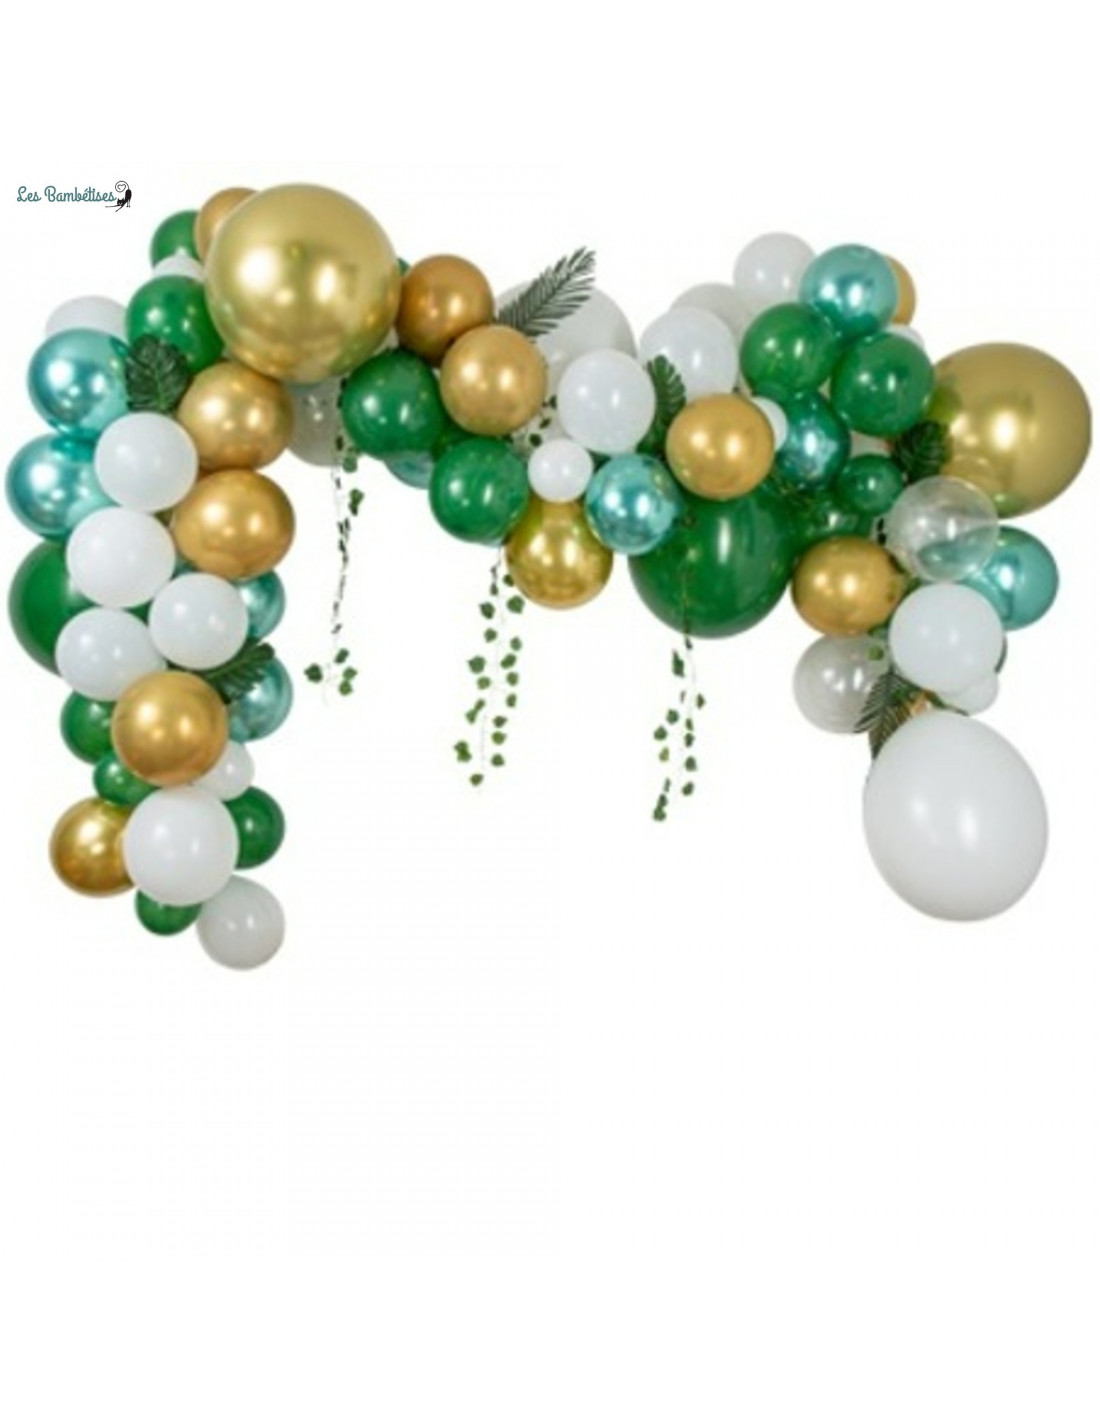 Kit guirlande ballons organiques xxl modèle arche jungle safari